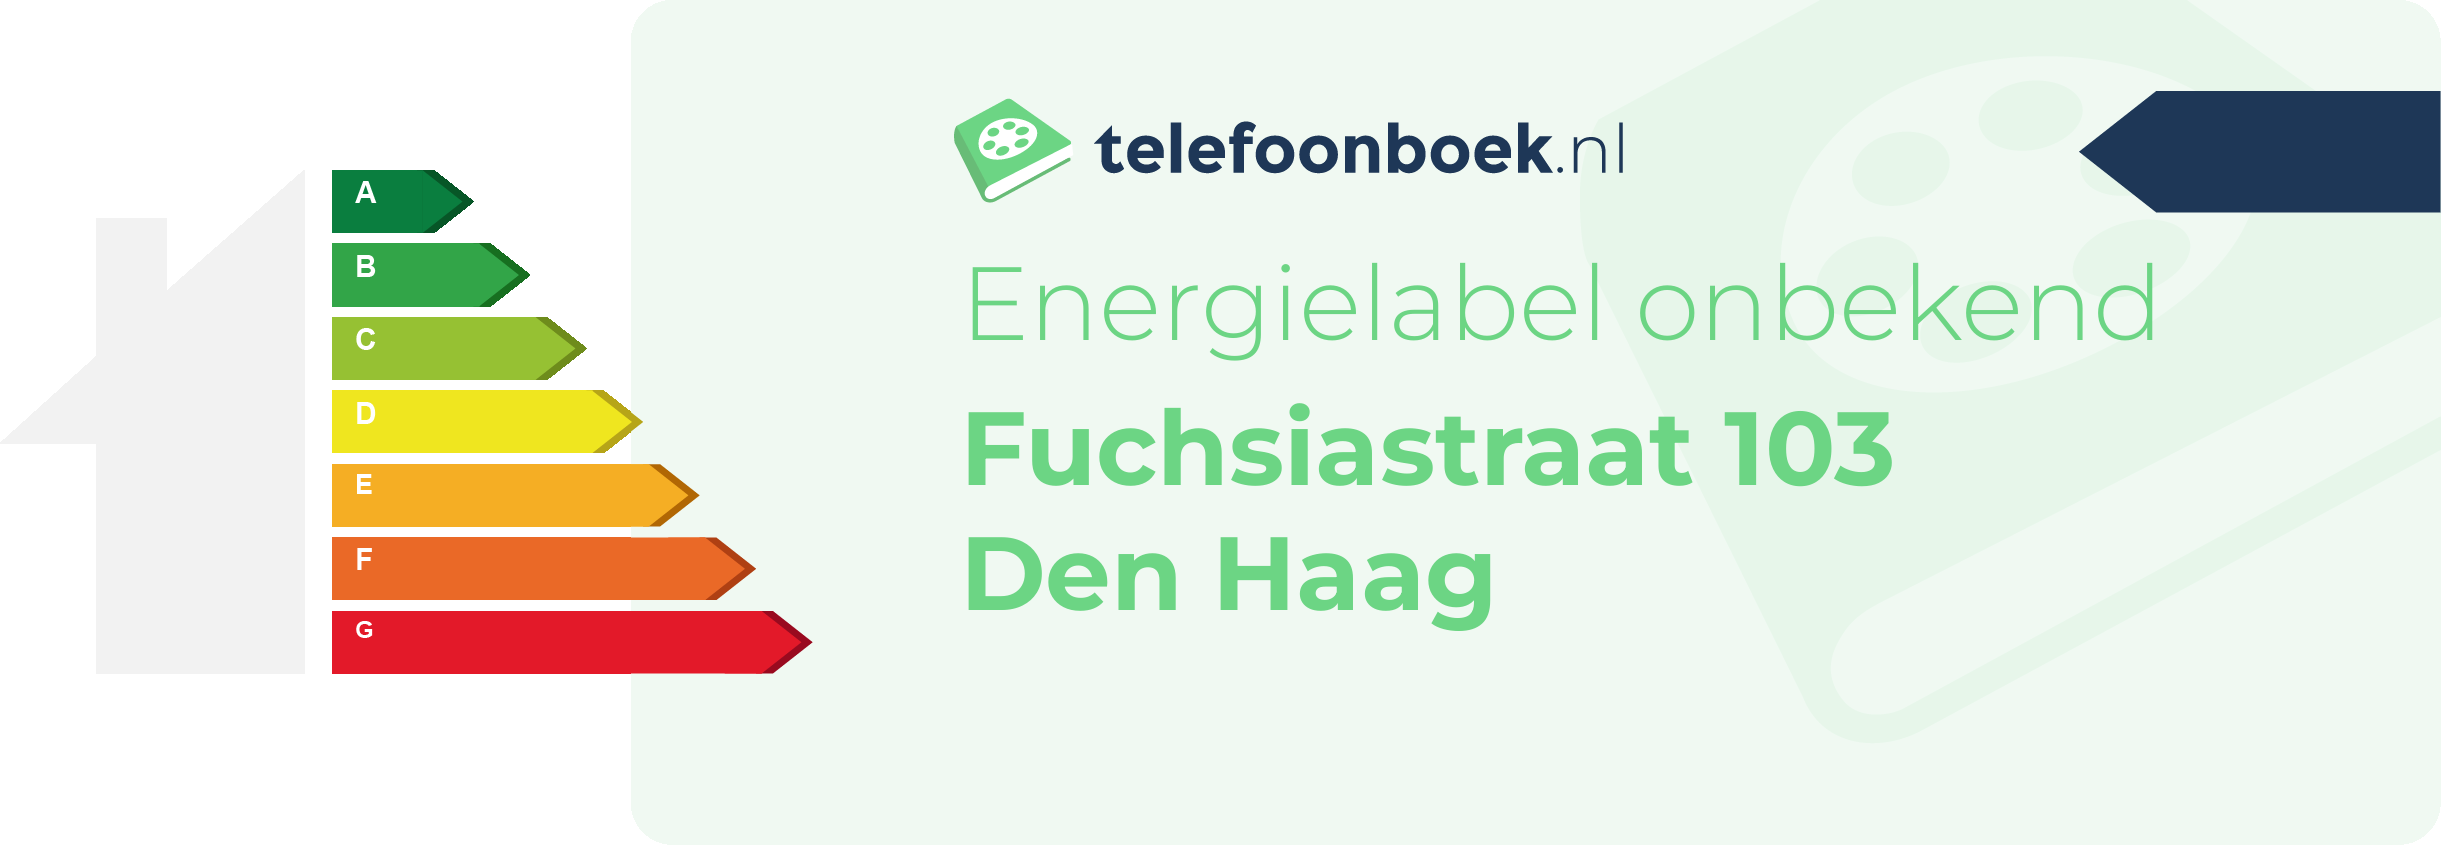 Energielabel Fuchsiastraat 103 Den Haag